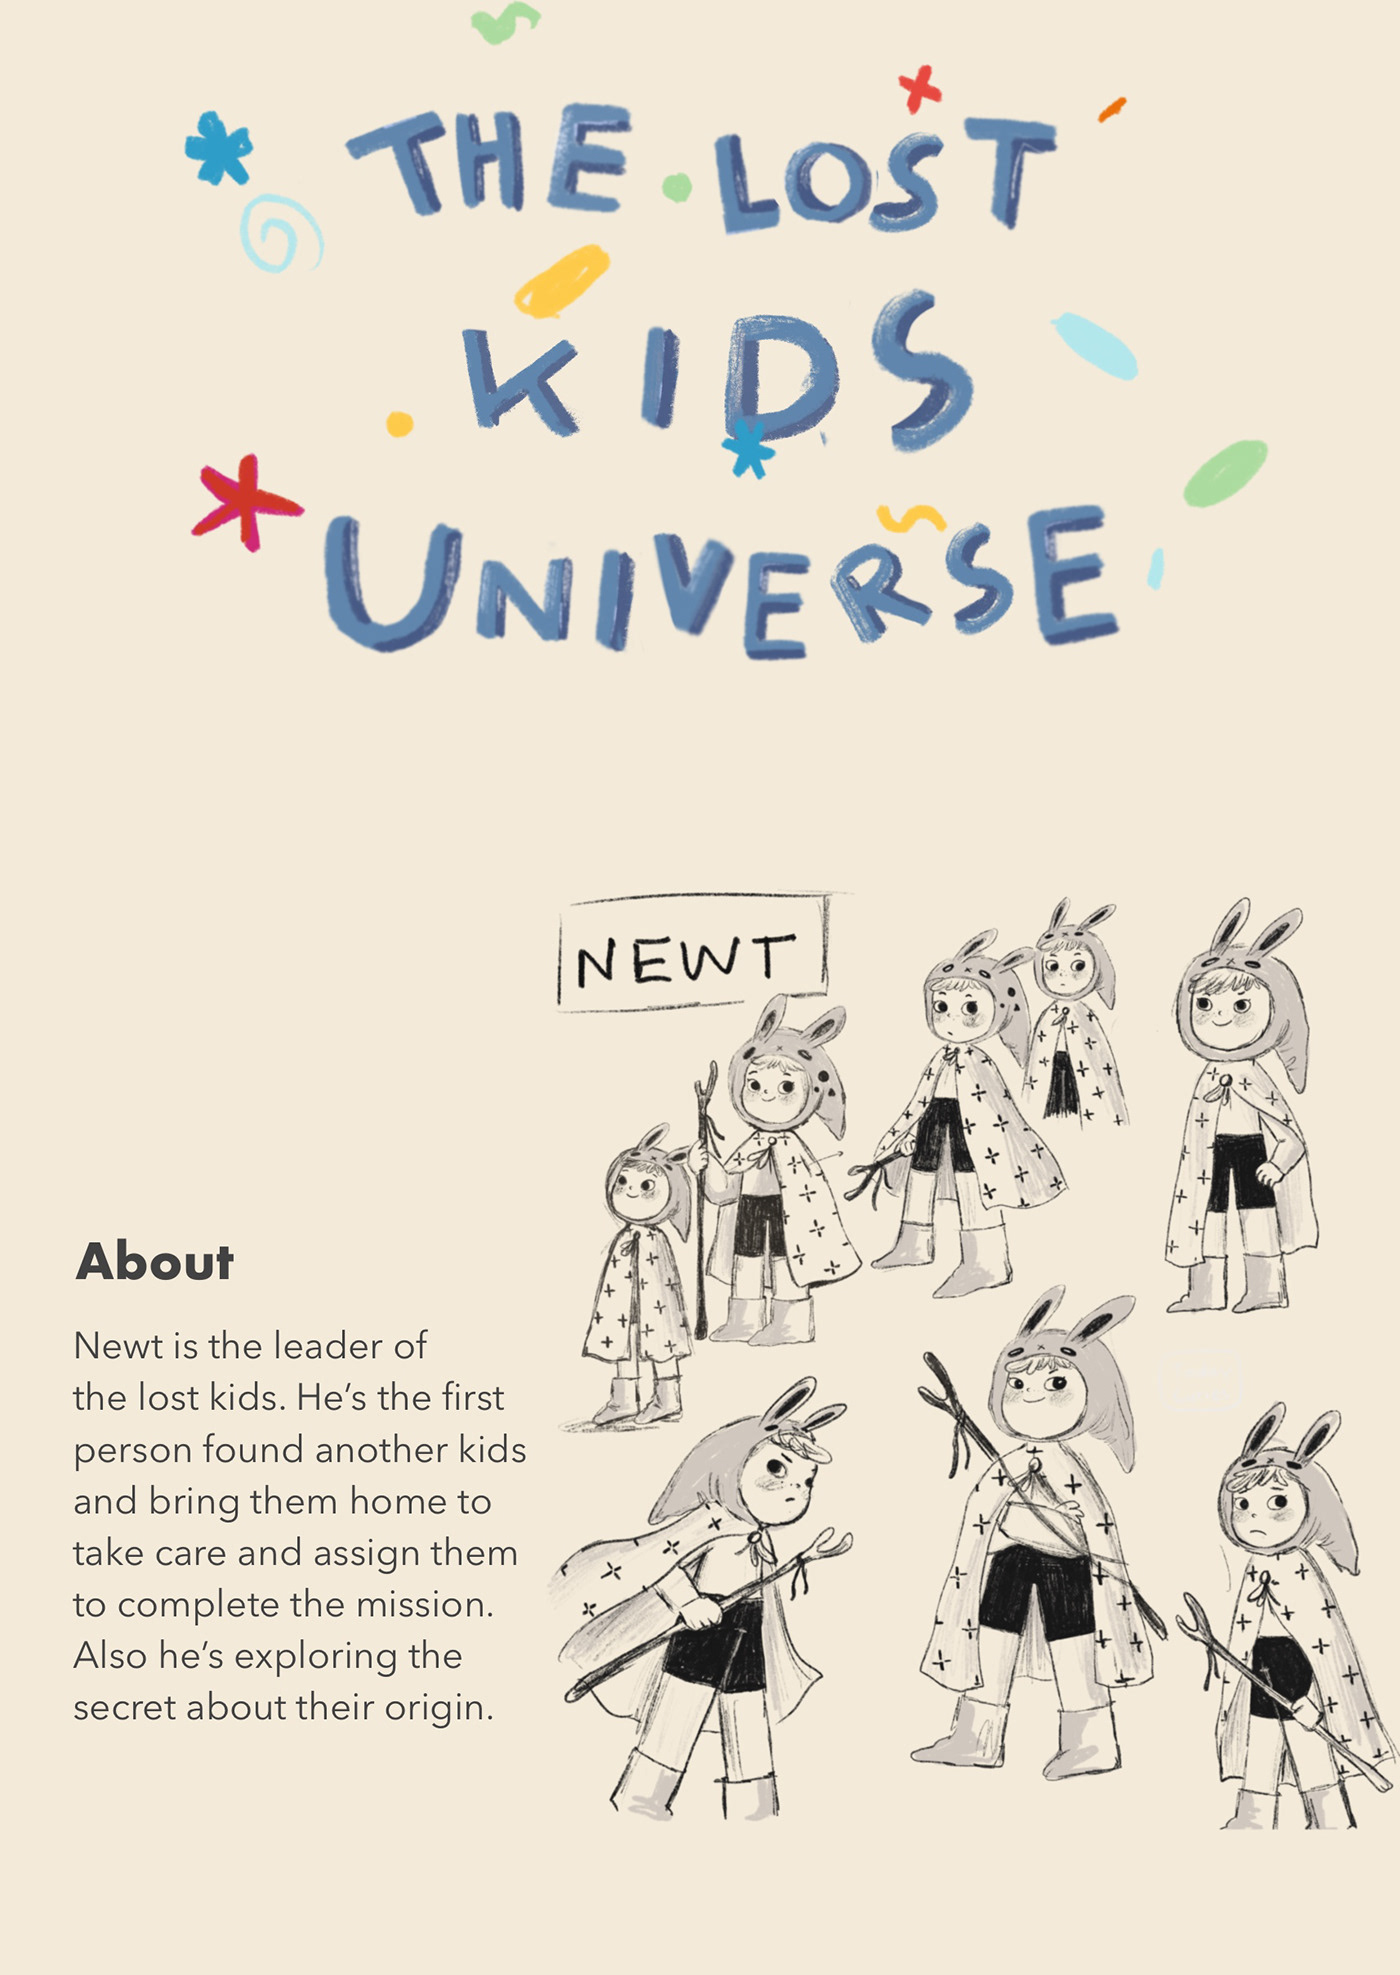 #characterdesign #childrenbook #illustration #newt #thelostkid